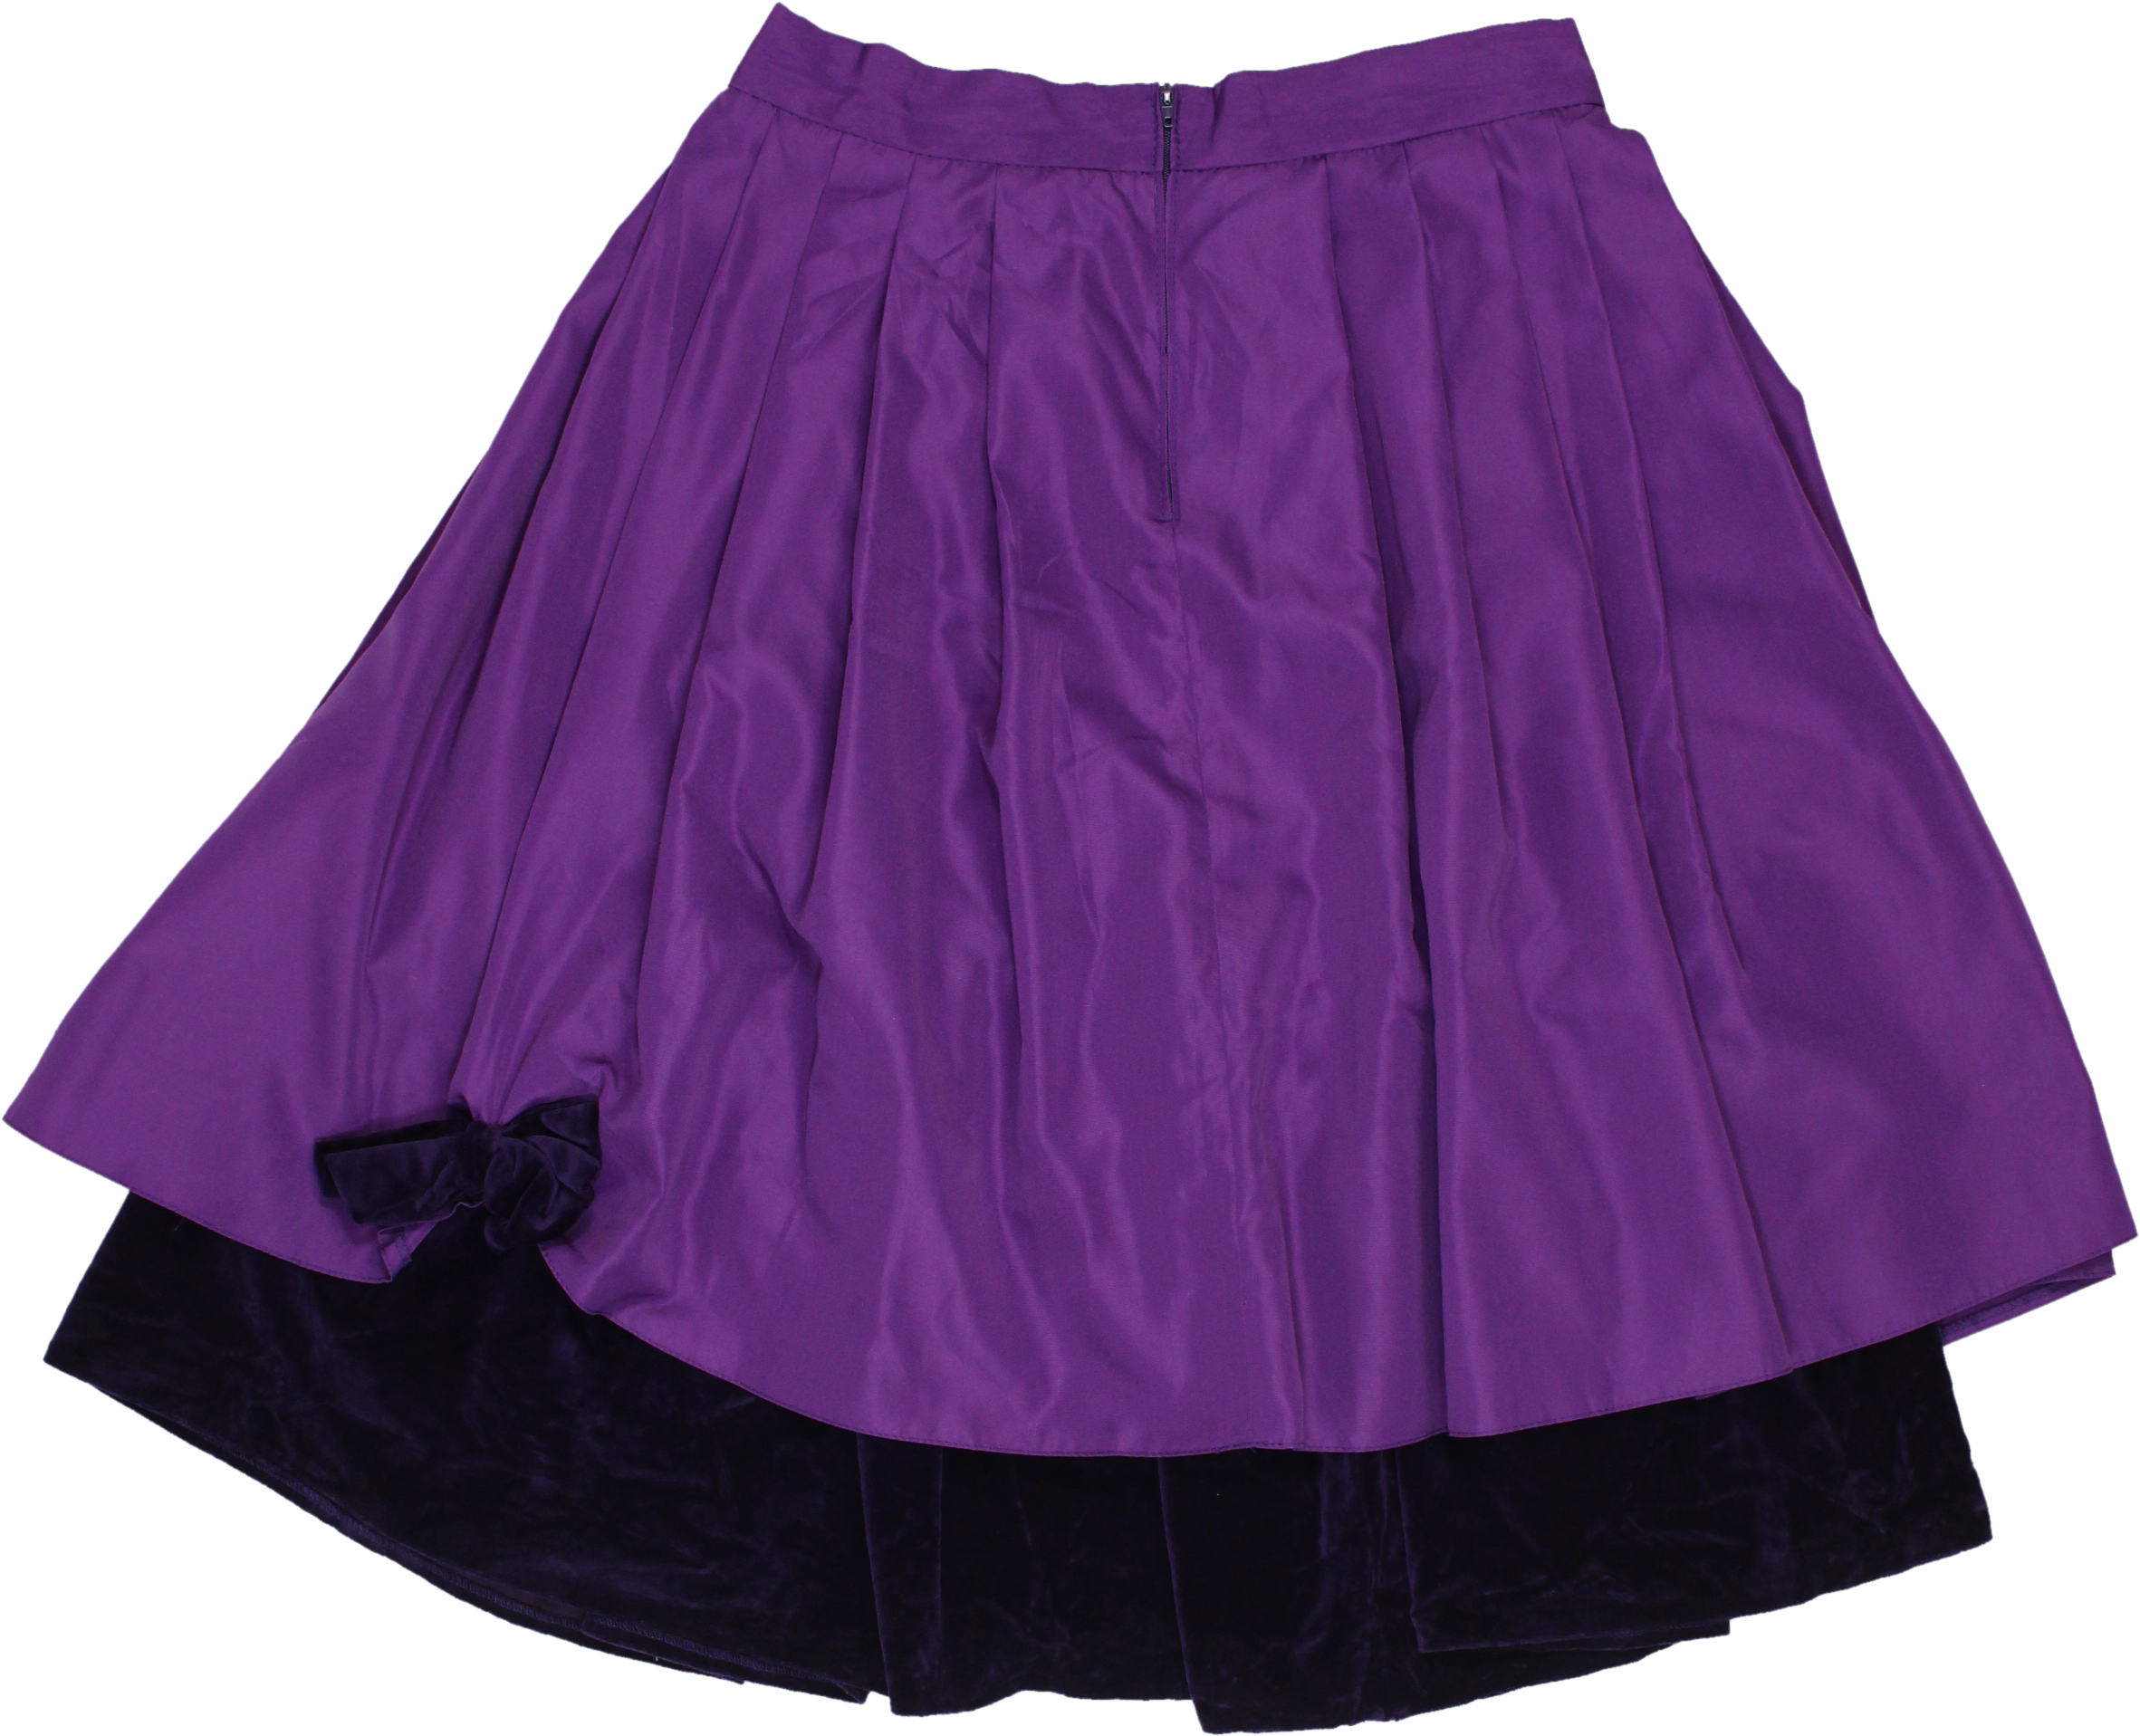 Brigitte Both - Skirt- ThriftTale.com - Vintage and second handclothing